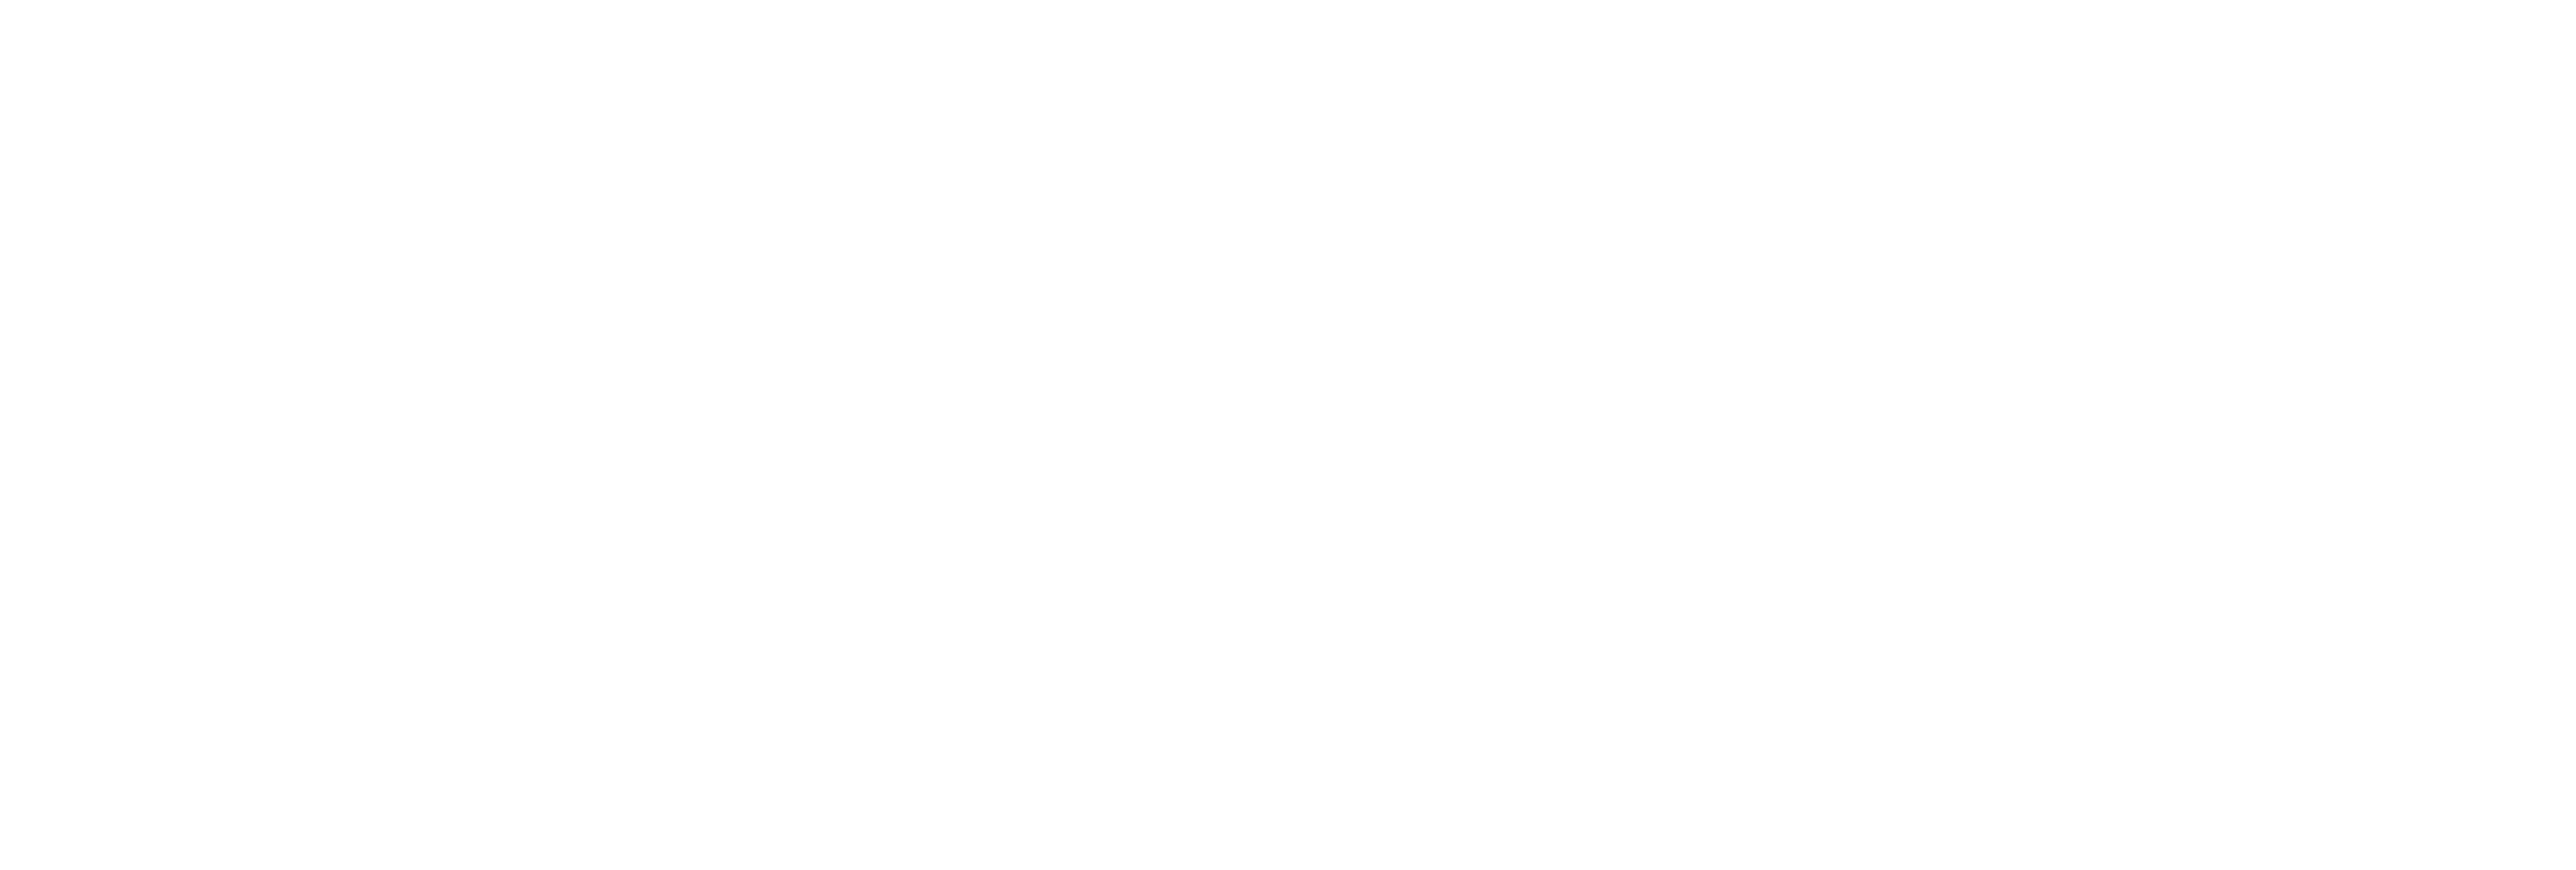 AniCura West-Friesland - Hoorn logo